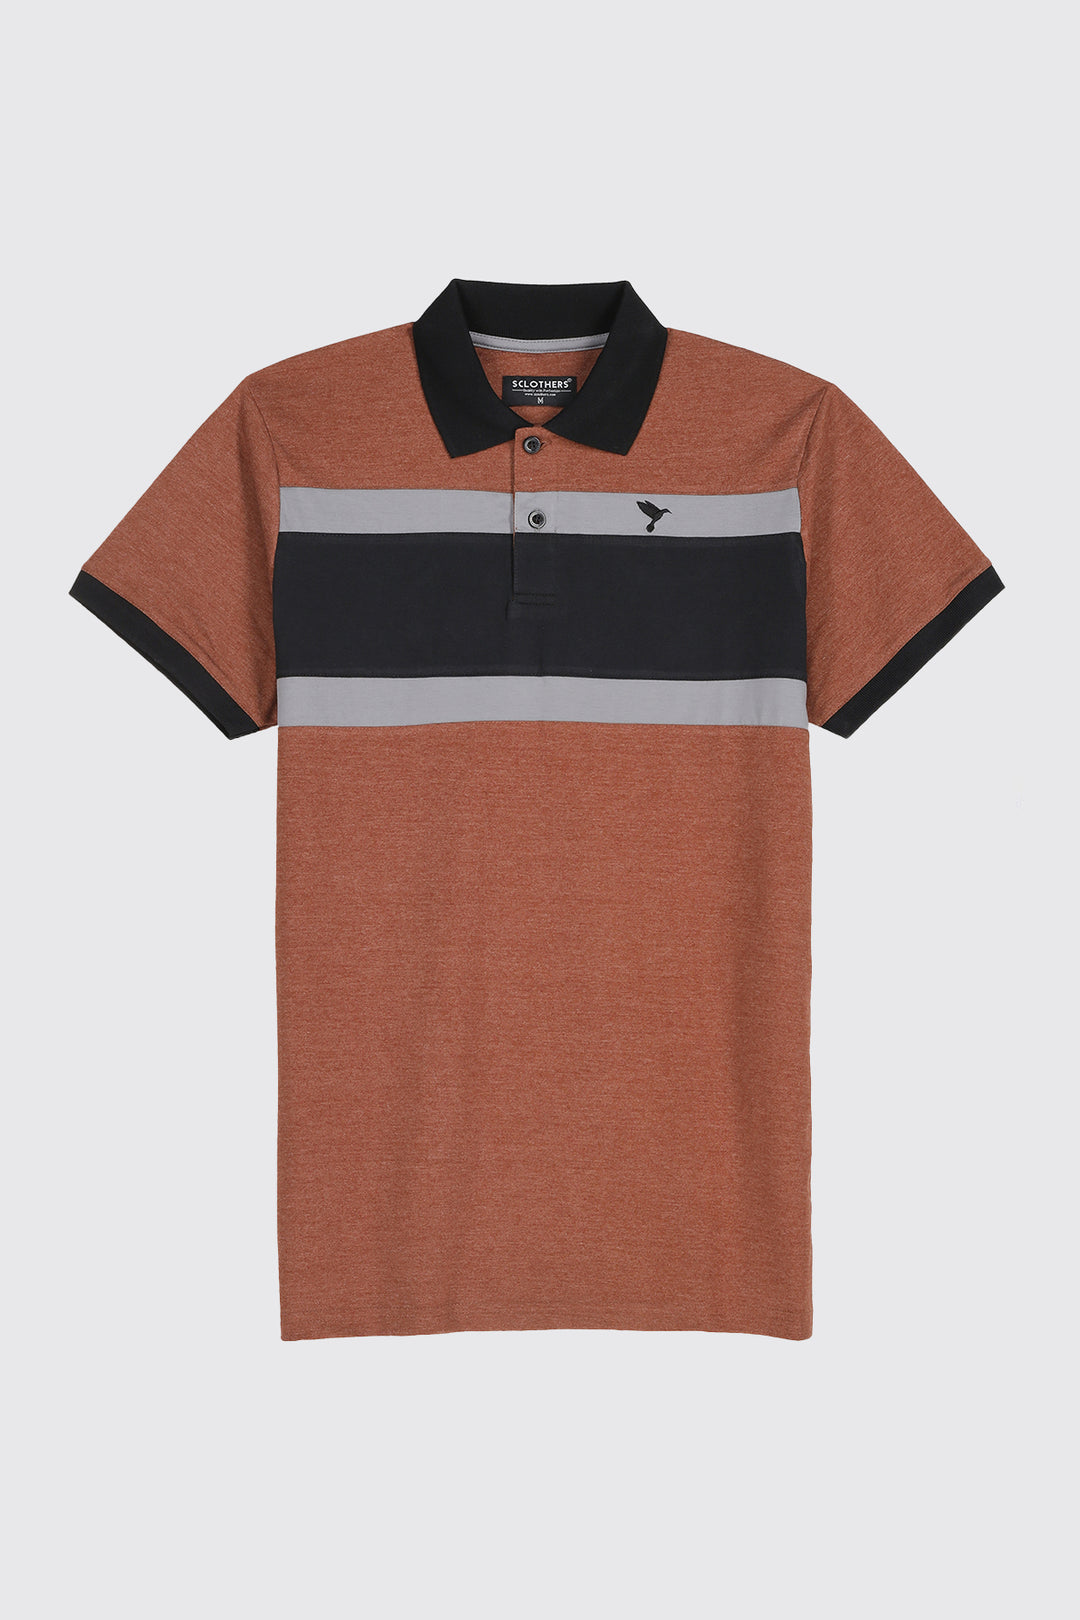 Brown Melange Tri-Color Polo Shirt - A23 - MP0180R